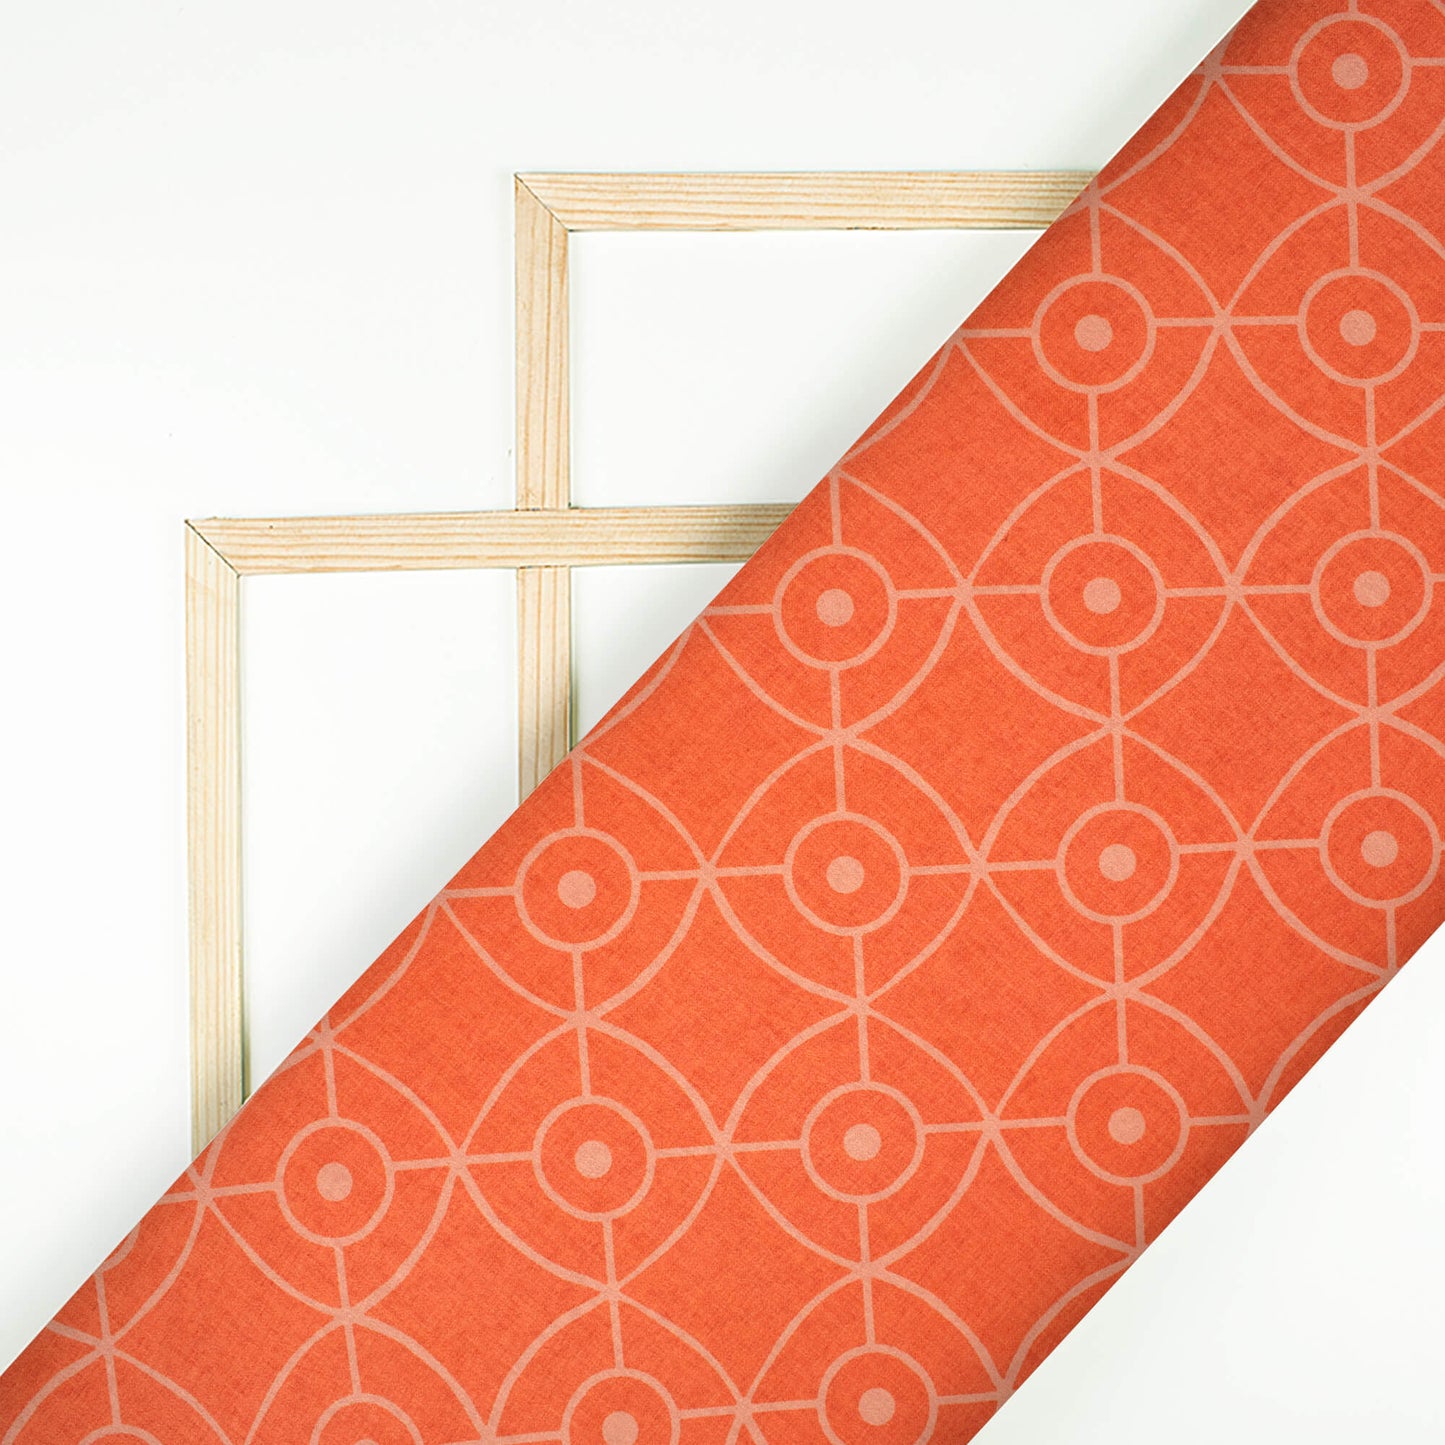 Coral Peach Geometric Pattern Digital Print Crepe Silk Fabric